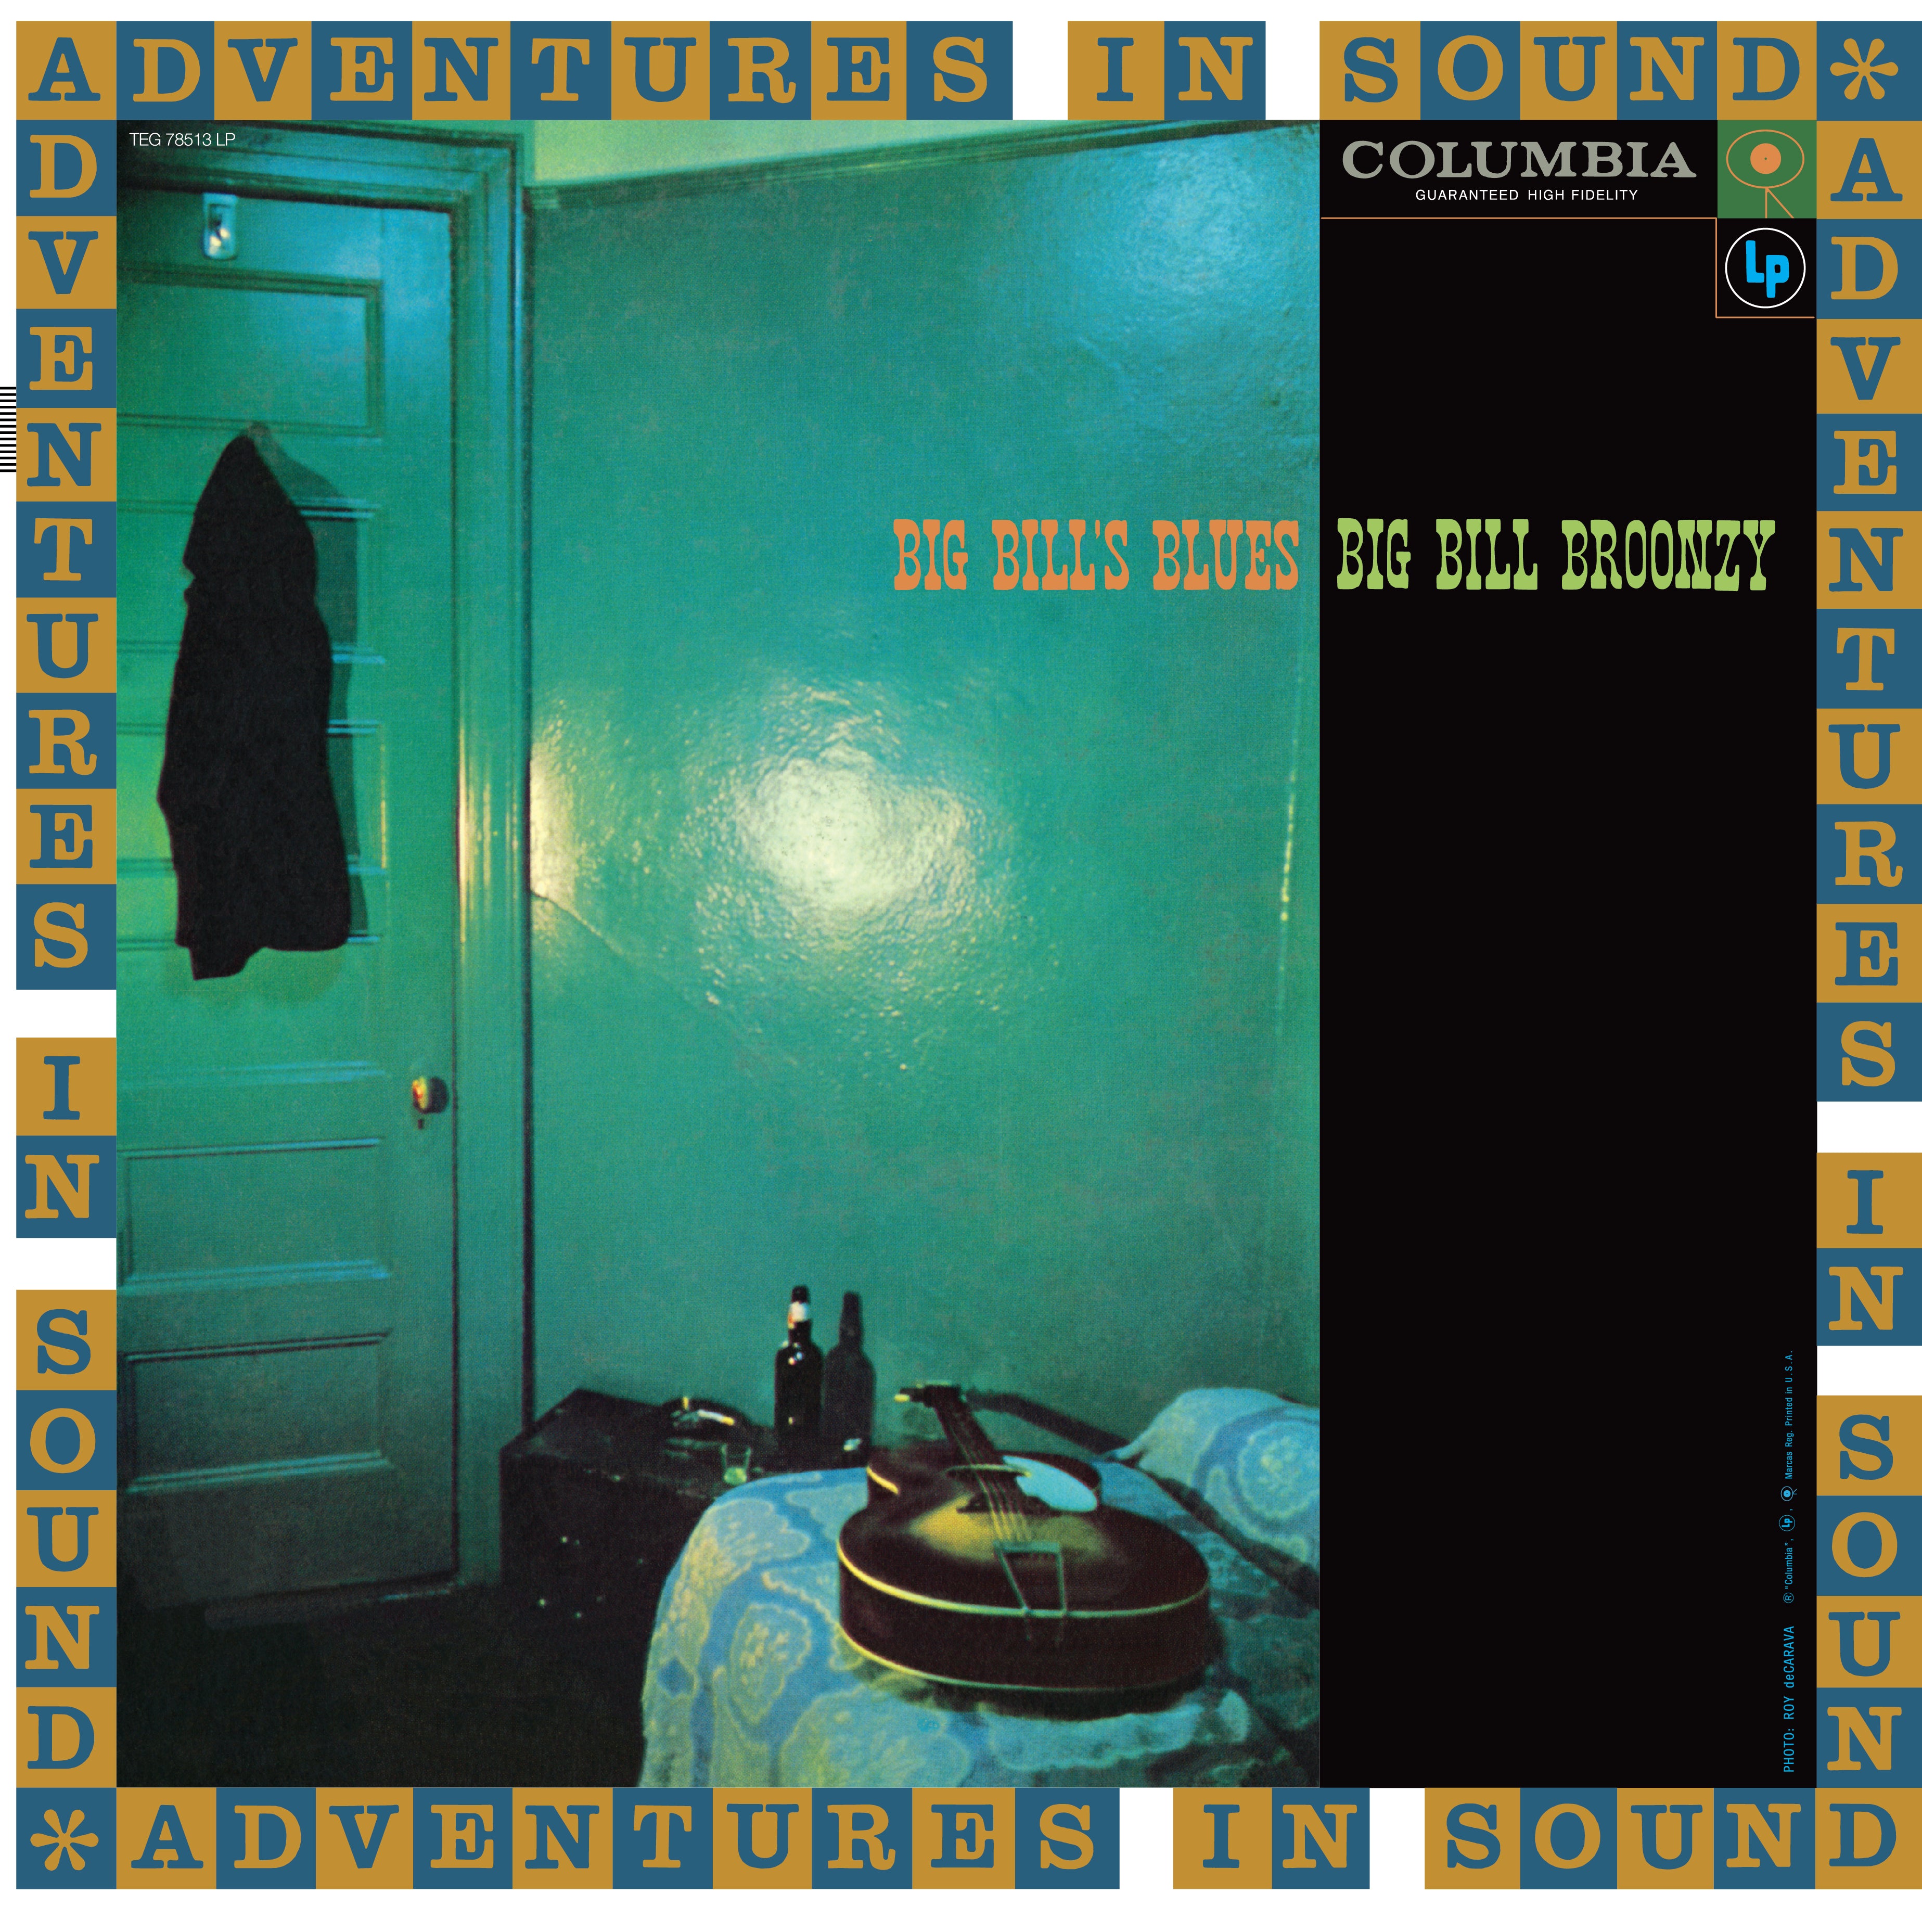 Big Bill Broonzy - Big Bill's Blues (Vinyl LP)